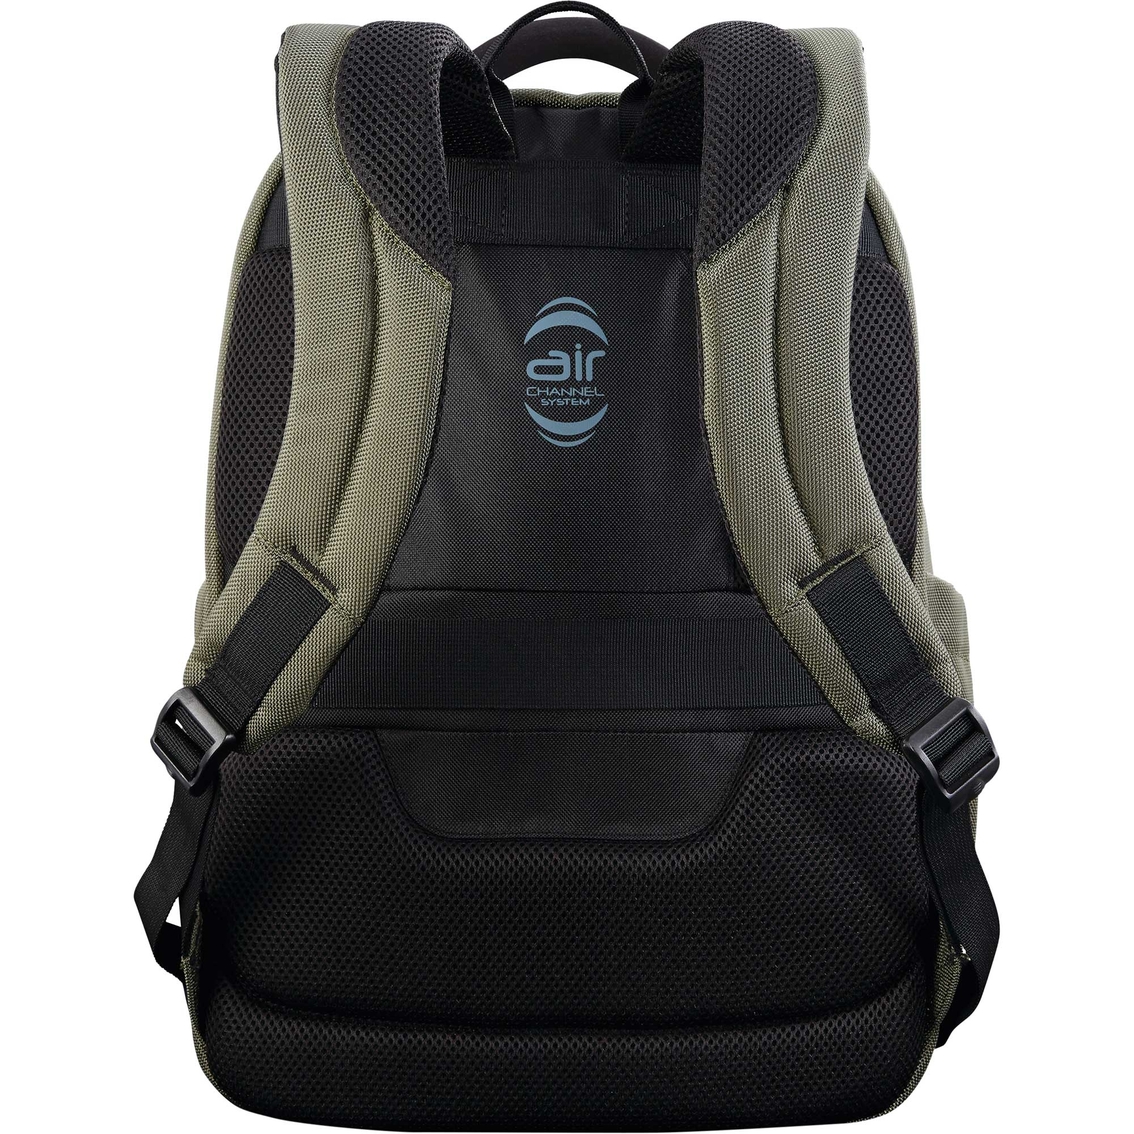 Samsonite Xenon 3.0 Large Backpack - Image 2 of 7